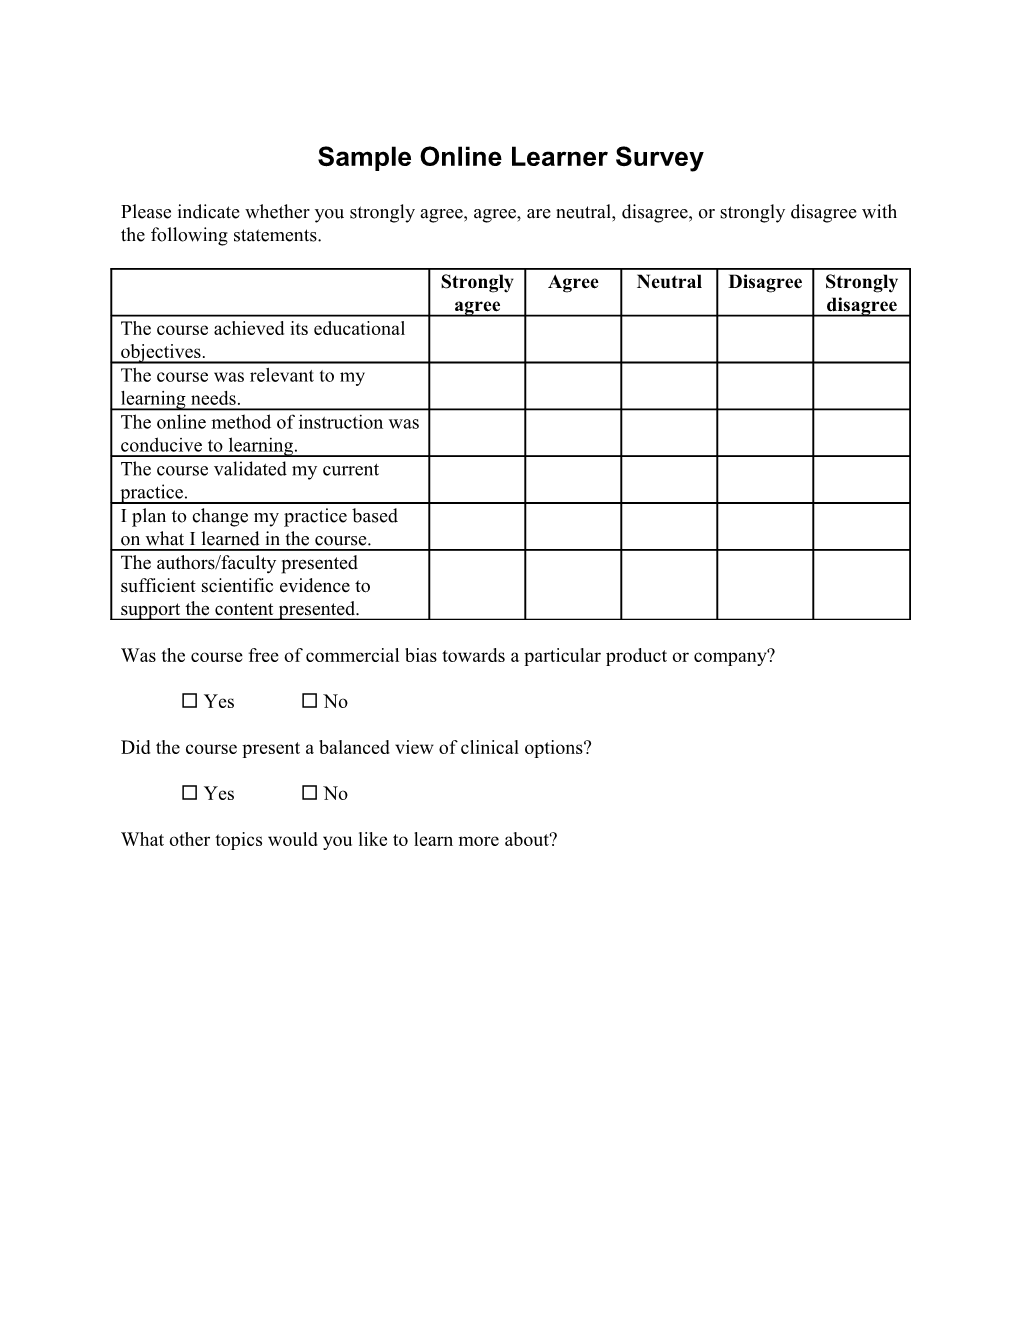 Sample Learner Survey